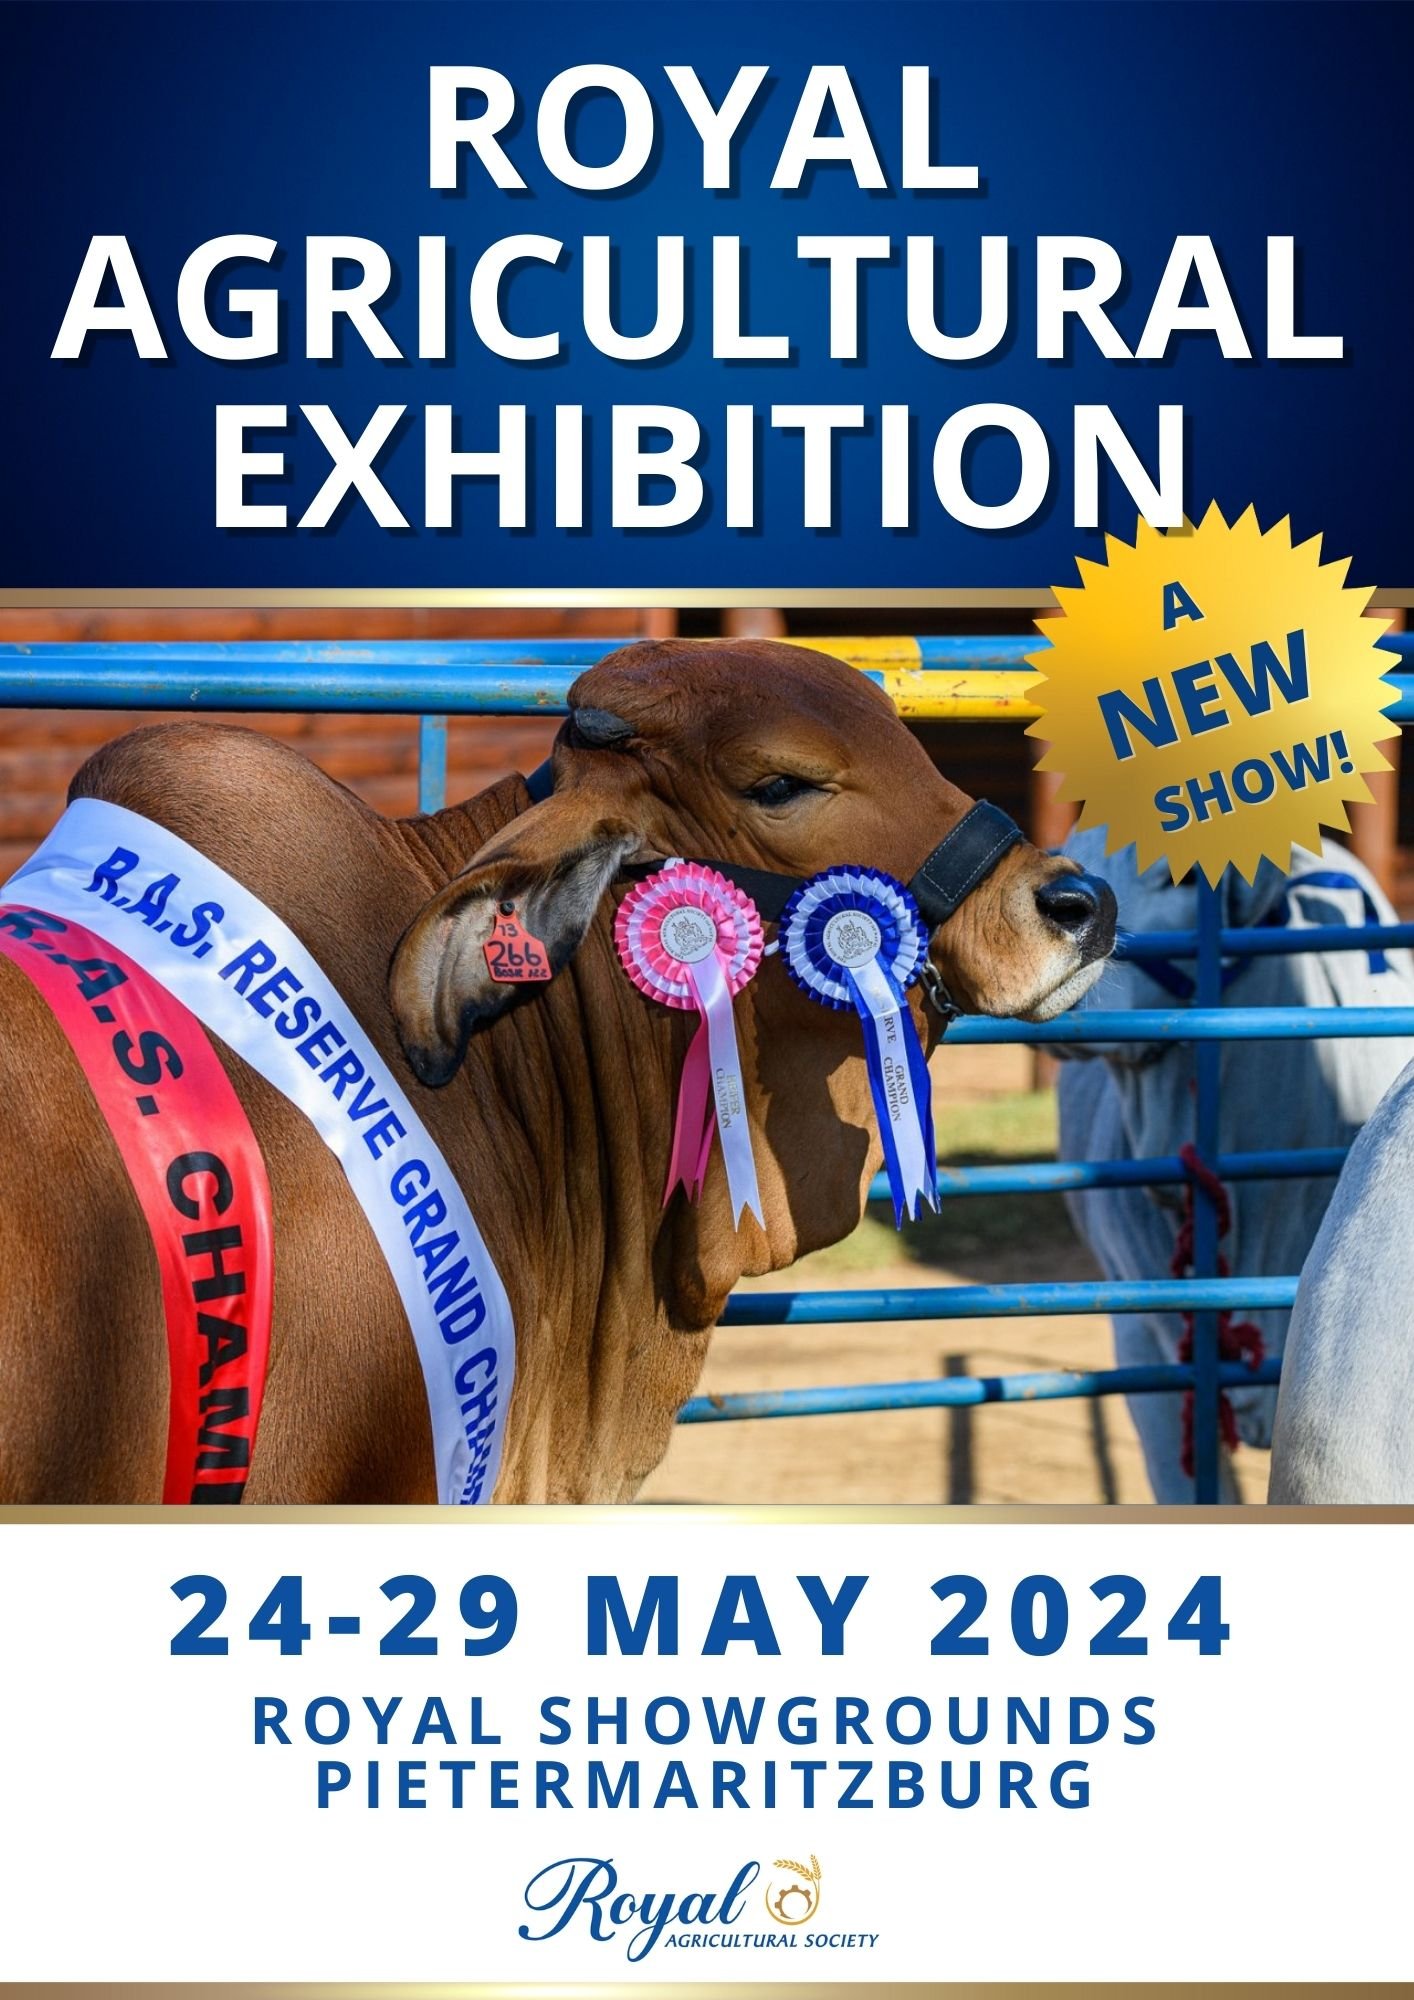 royal-agricultural-exhibition-may-2024-1.jpg